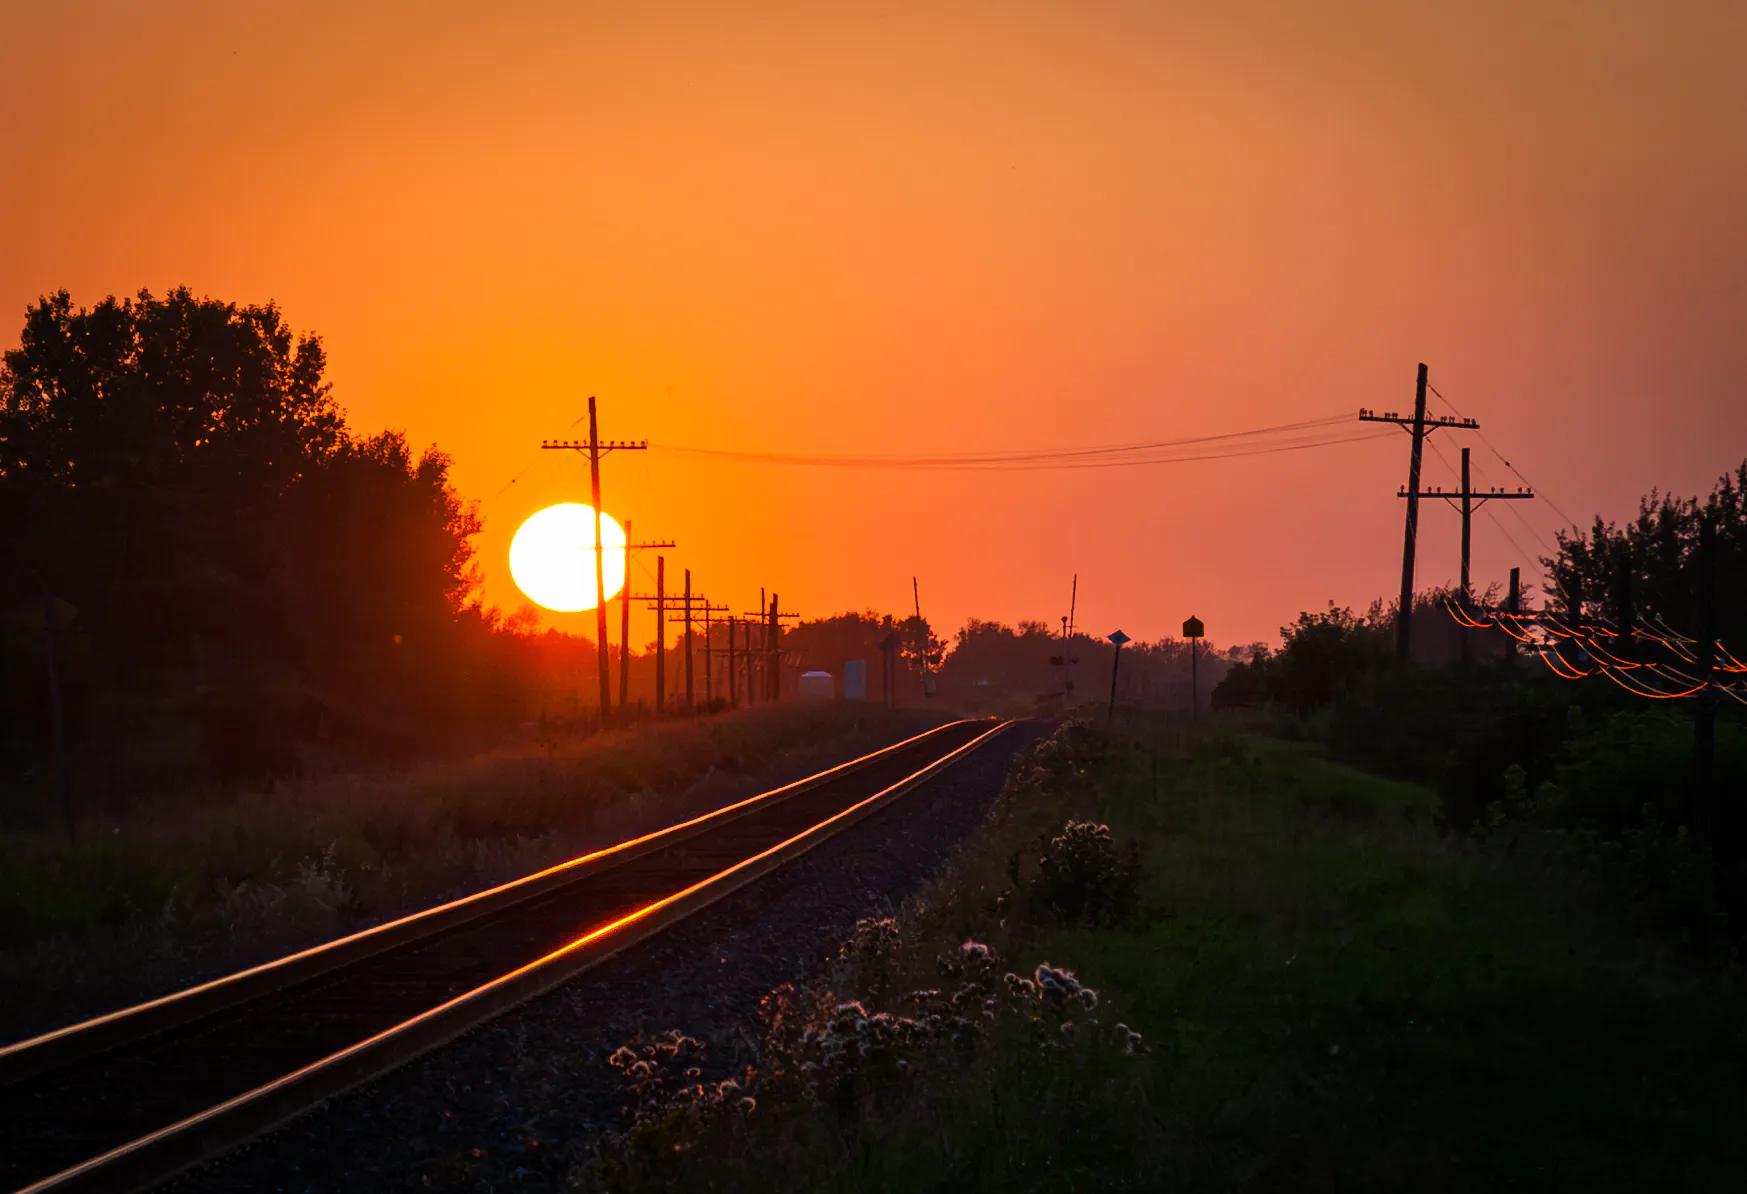 Sunset over rails